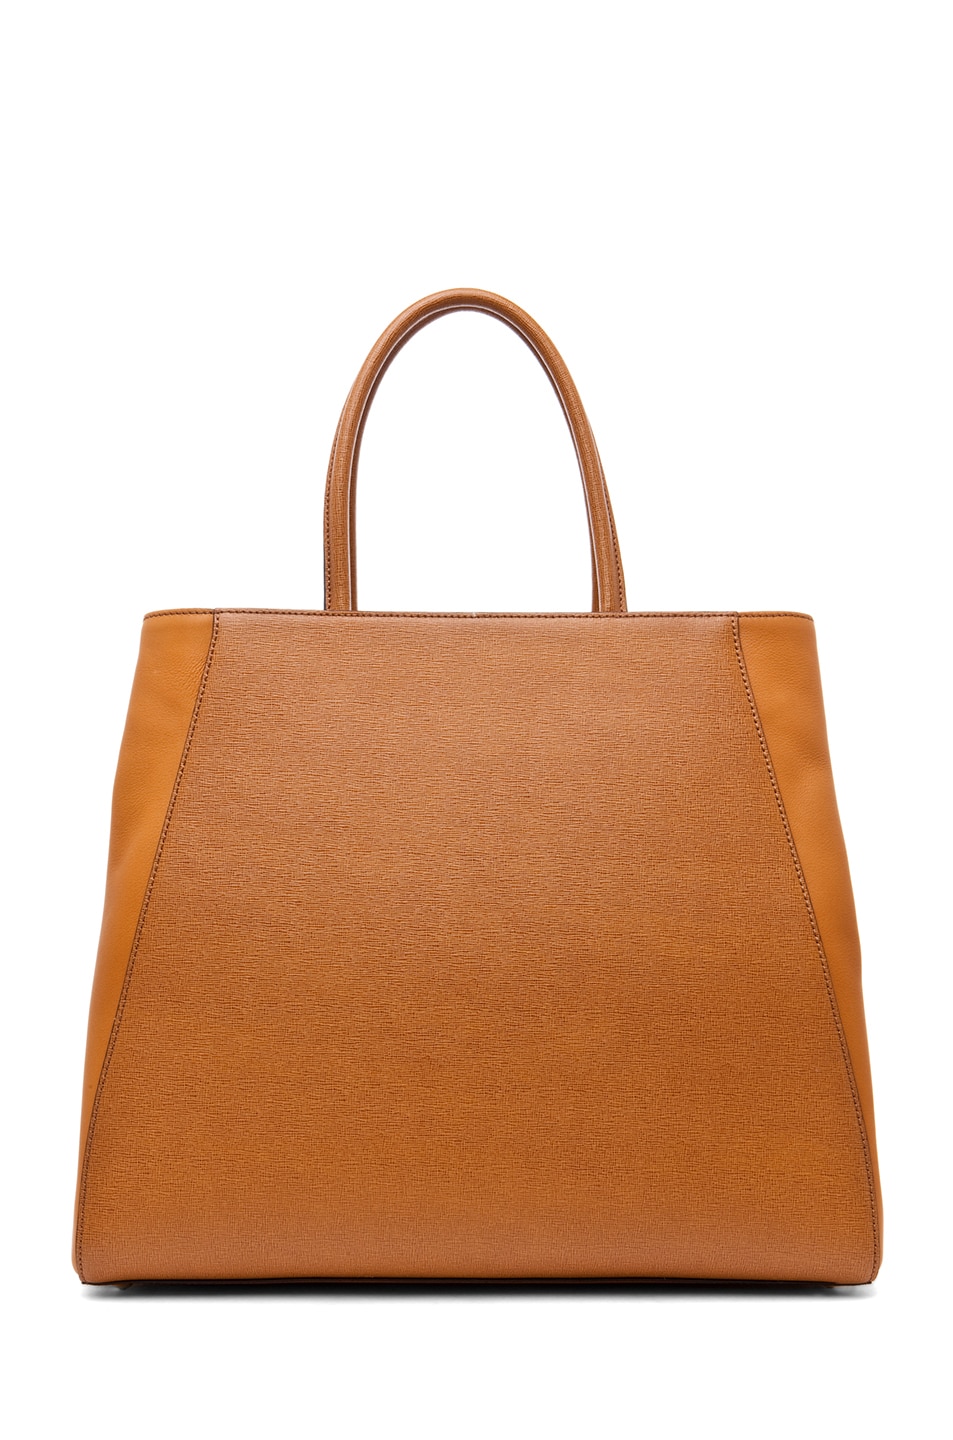 Fendi Large Shopper Bag in Dark Orange | FWRD